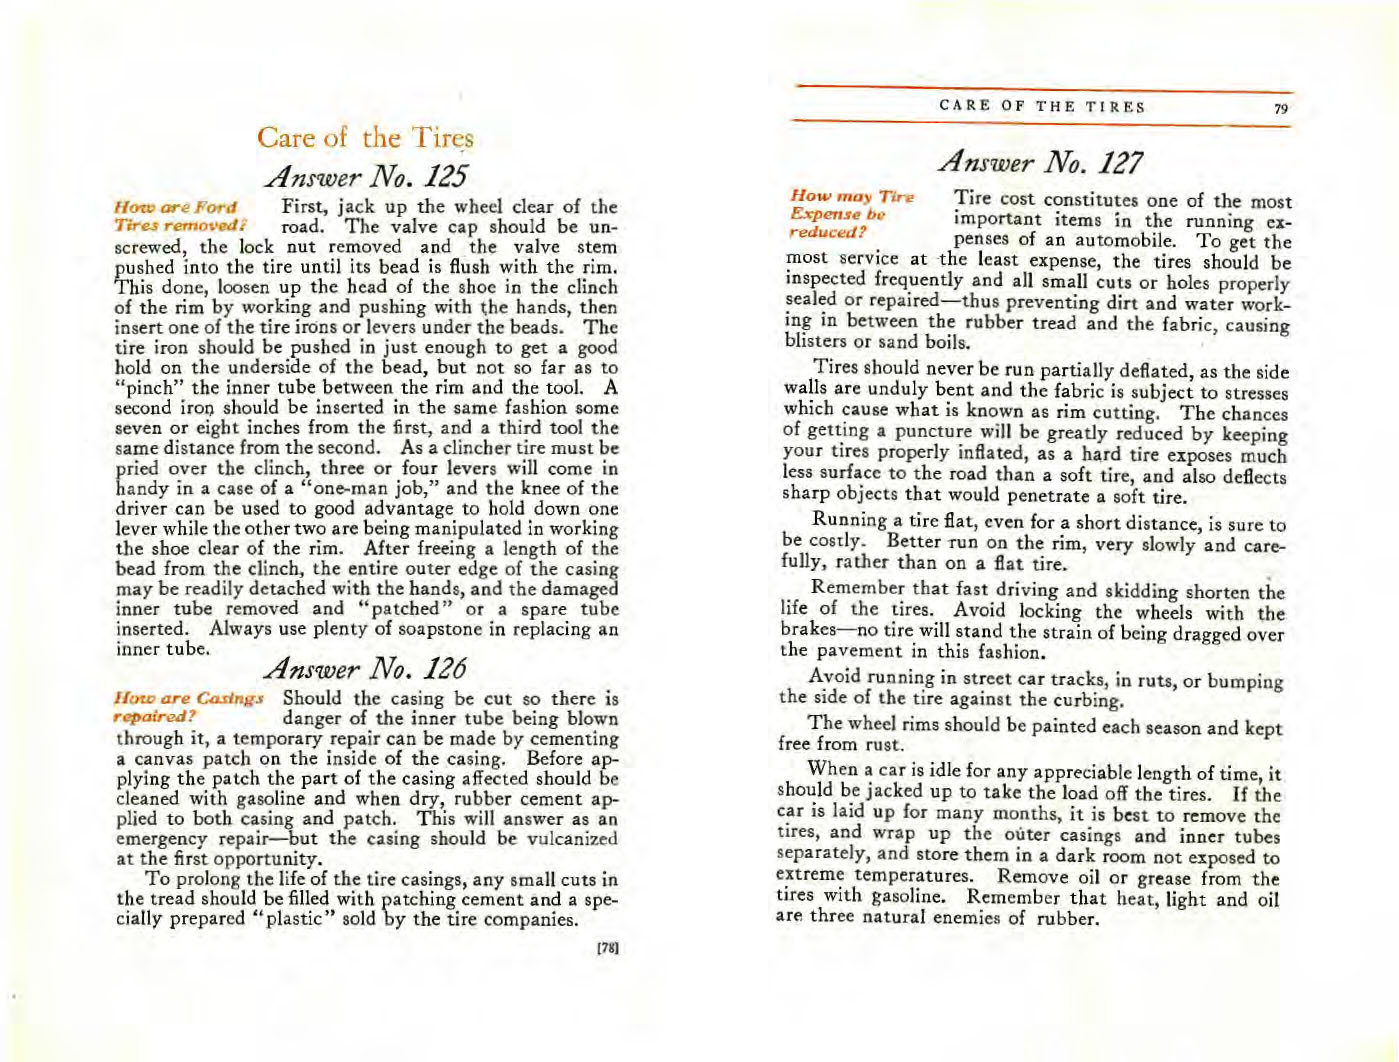 n_1915 Ford Owners Manual-78-79.jpg